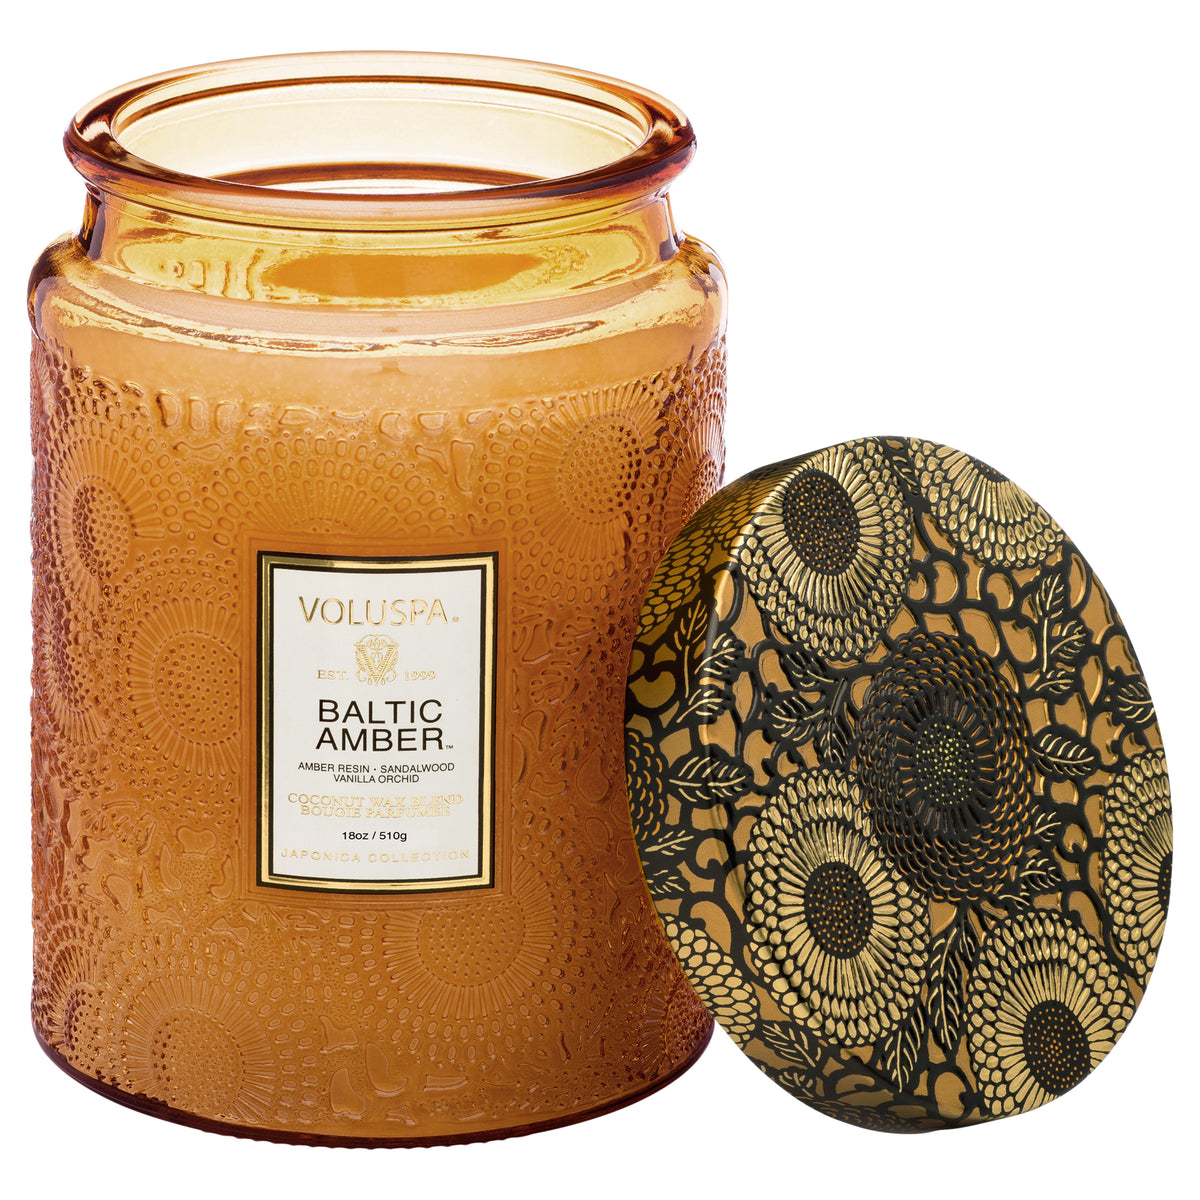 Voluspa - Baltic Amber Large Jar 18oz Candle